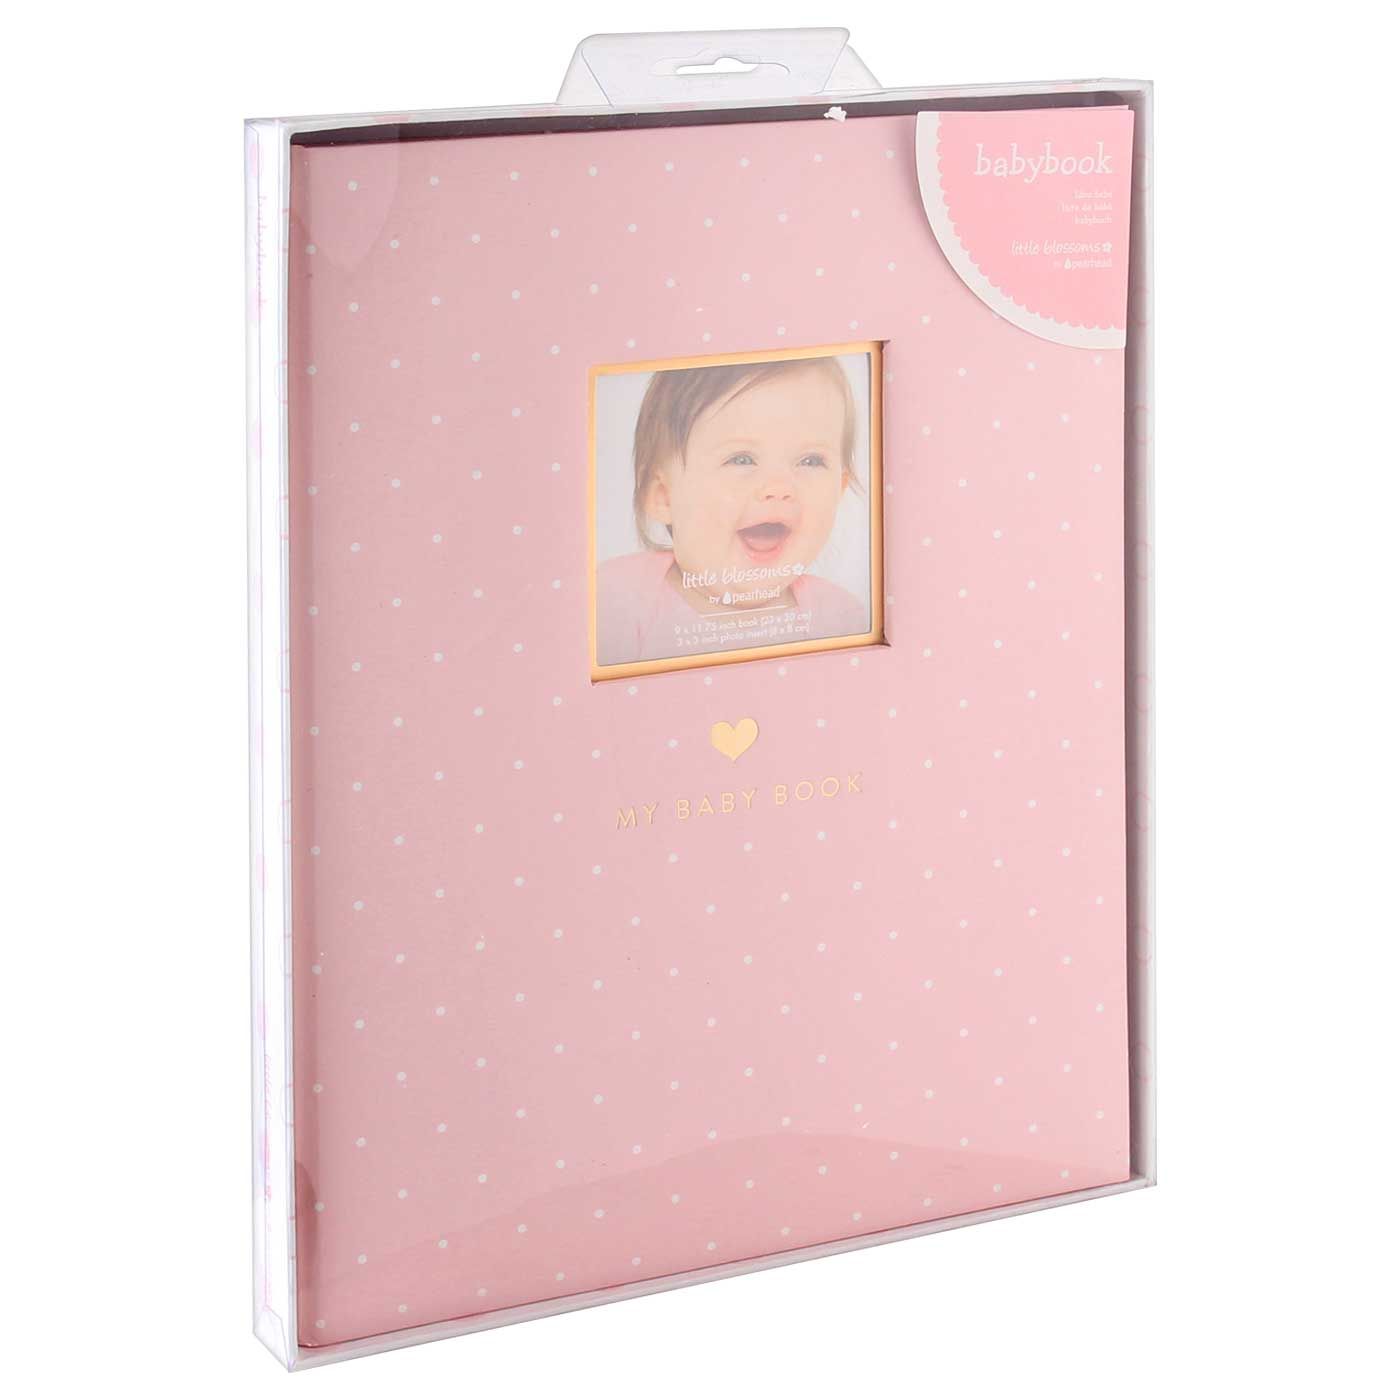 Sweet Welcome Babybook Pink - 5